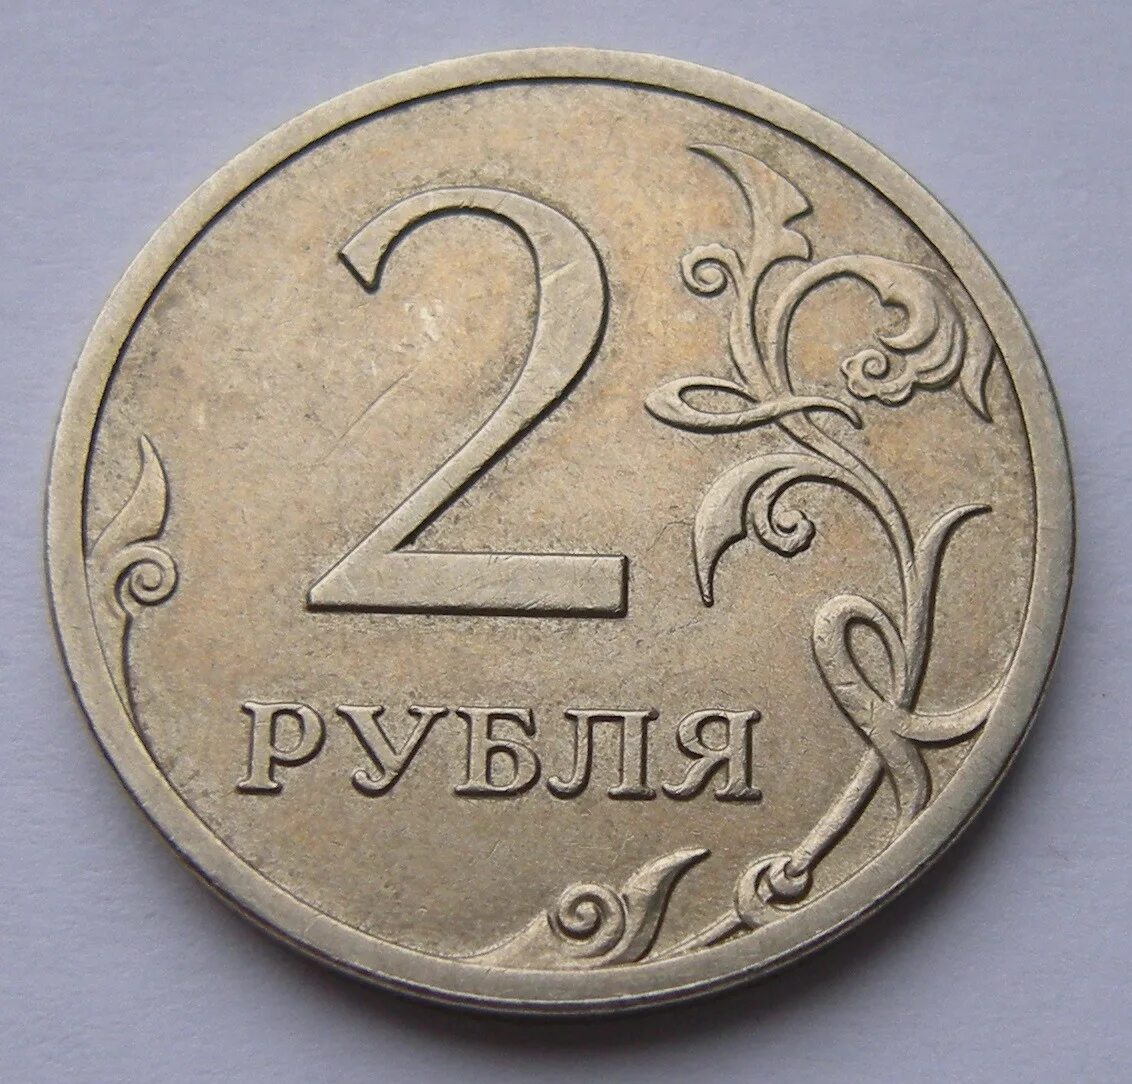 35 лет в рублях. Монета 2 рубля. Монеты 1 2 5 рублей. Изображение монет. Монеты 1 руб 2 руб.